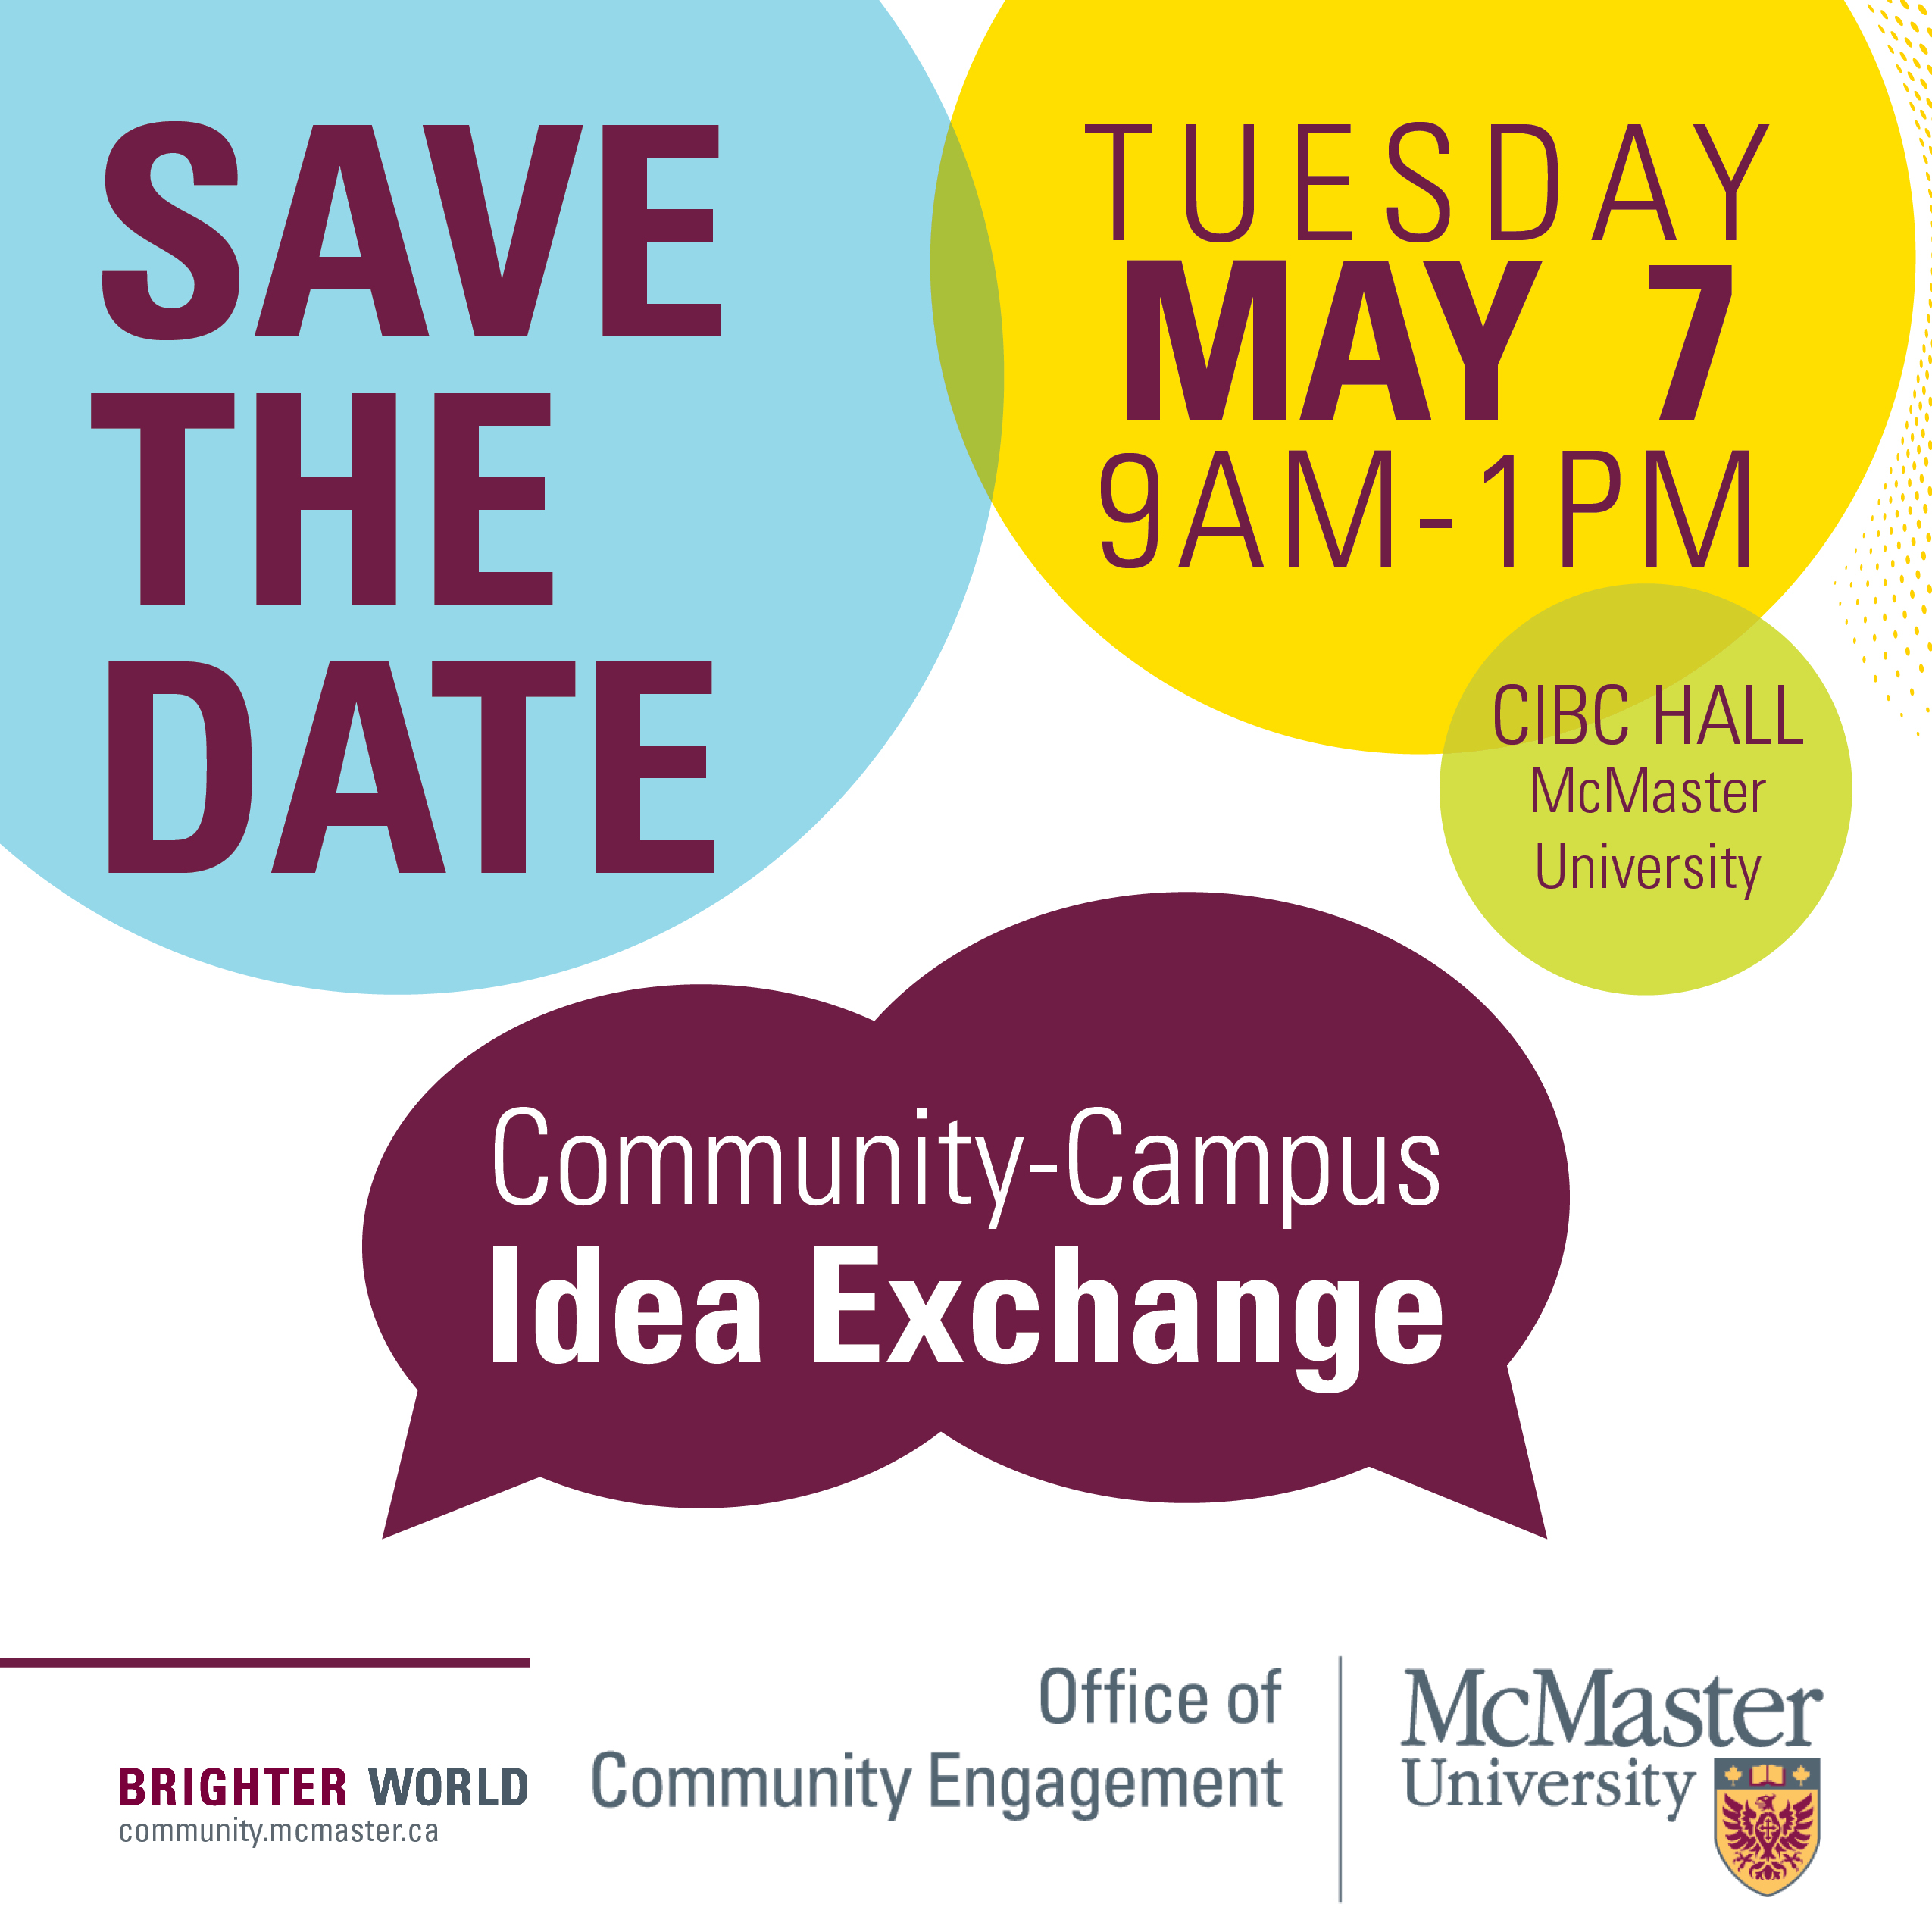 Community-Campus Idea Exchange